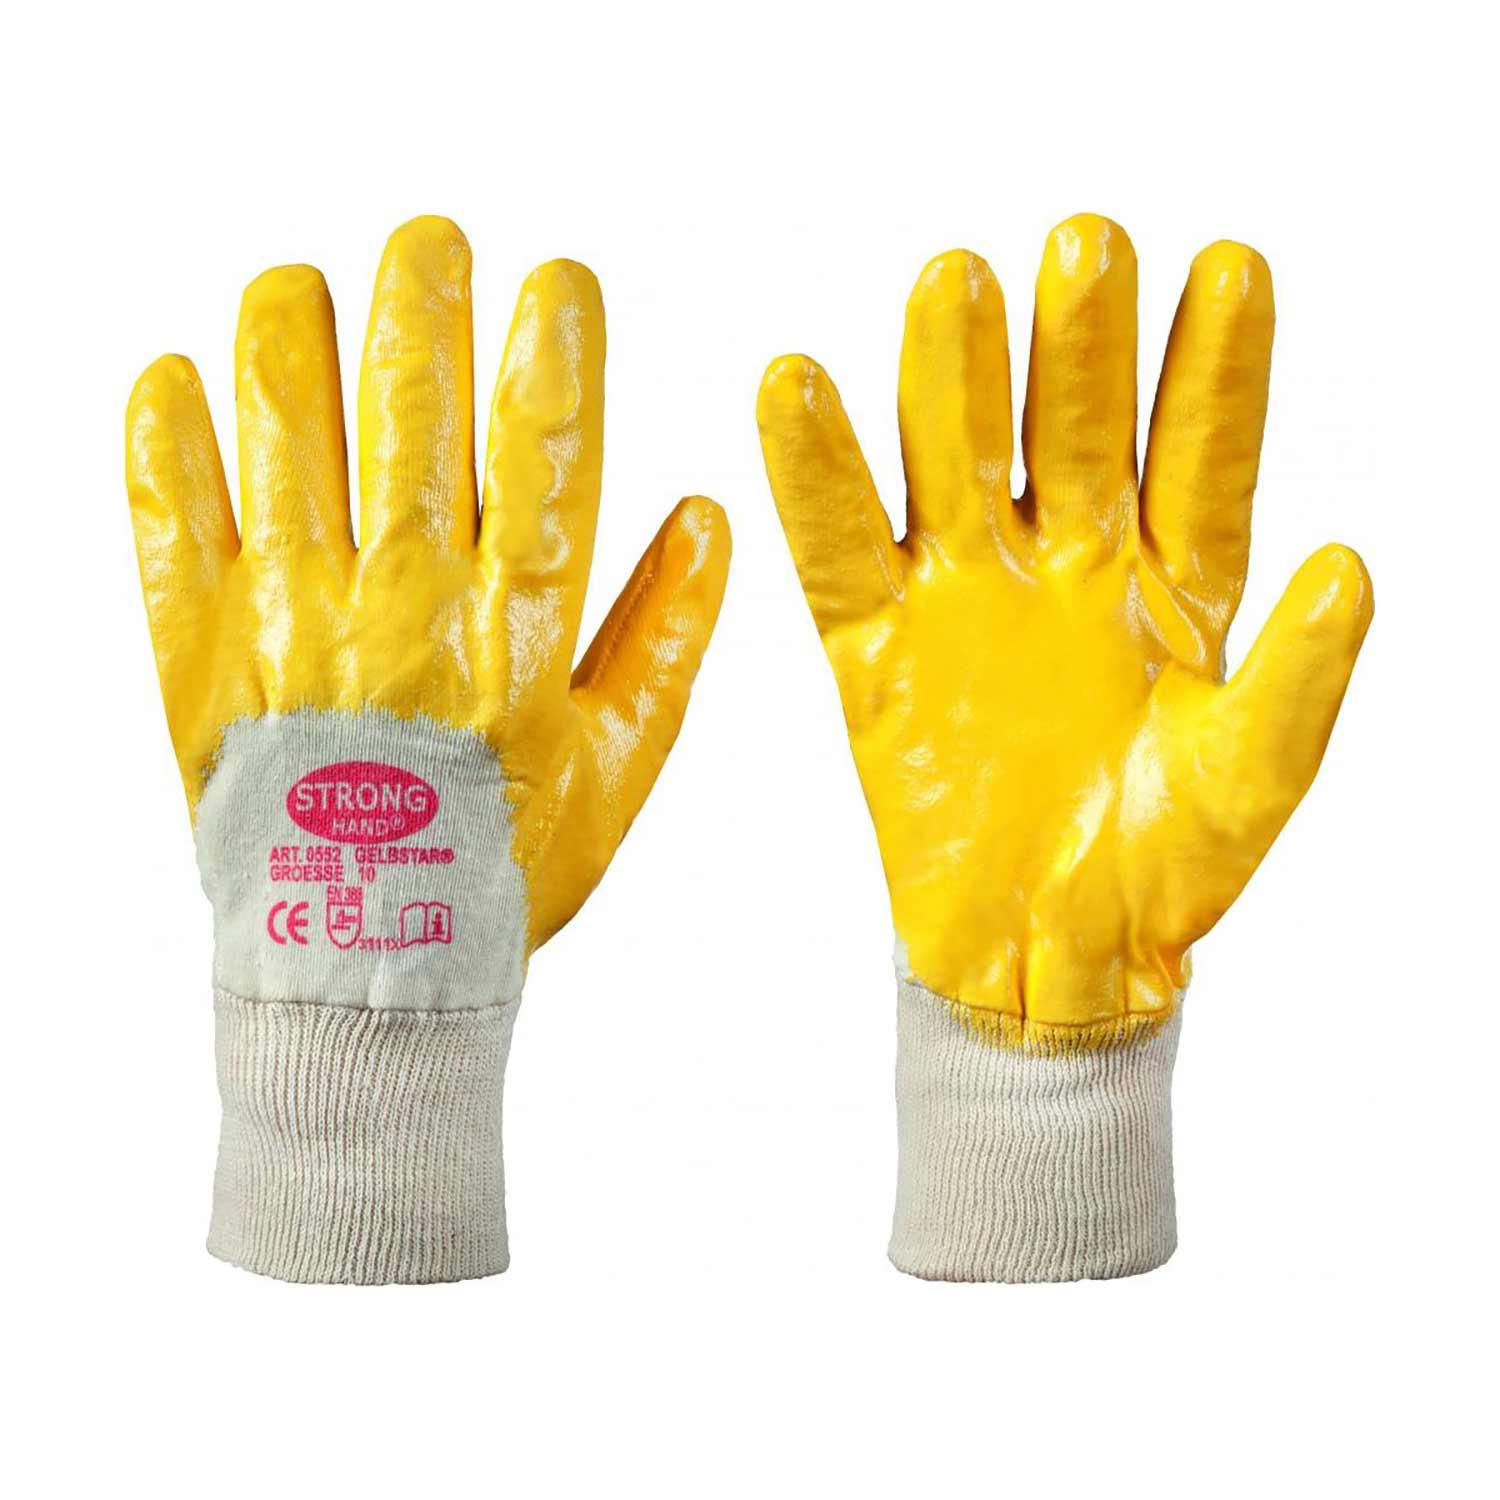 Gelbstar Stronghand Nitril Handschuh Gr. 7